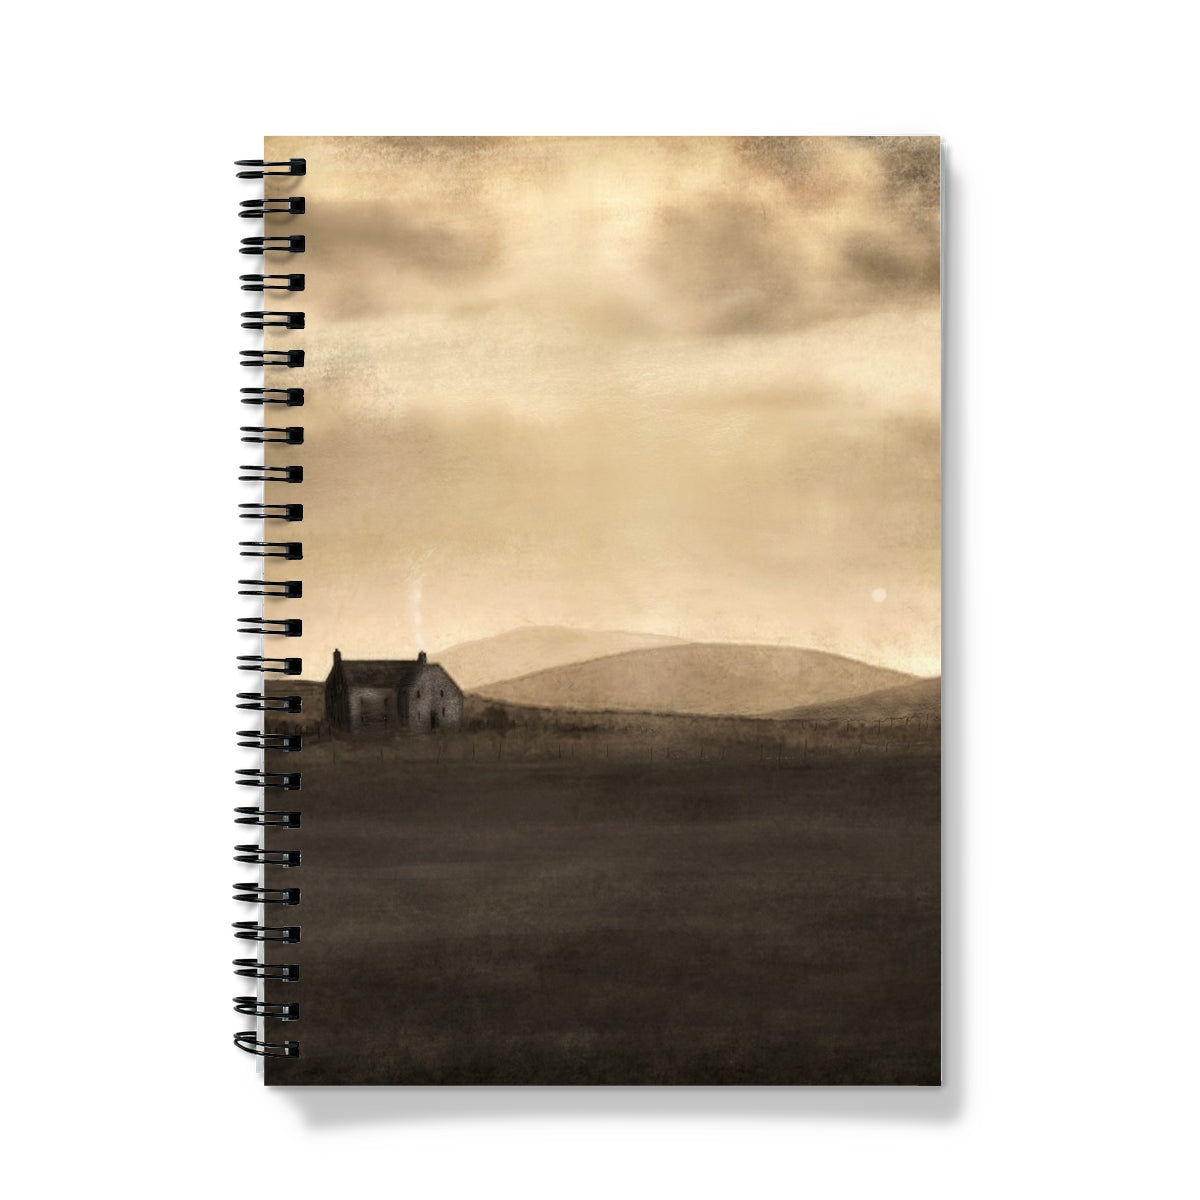 A Moonlit Croft Art Gifts Notebook-Journals & Notebooks-Hebridean Islands Art Gallery-A4-Graph-Paintings, Prints, Homeware, Art Gifts From Scotland By Scottish Artist Kevin Hunter